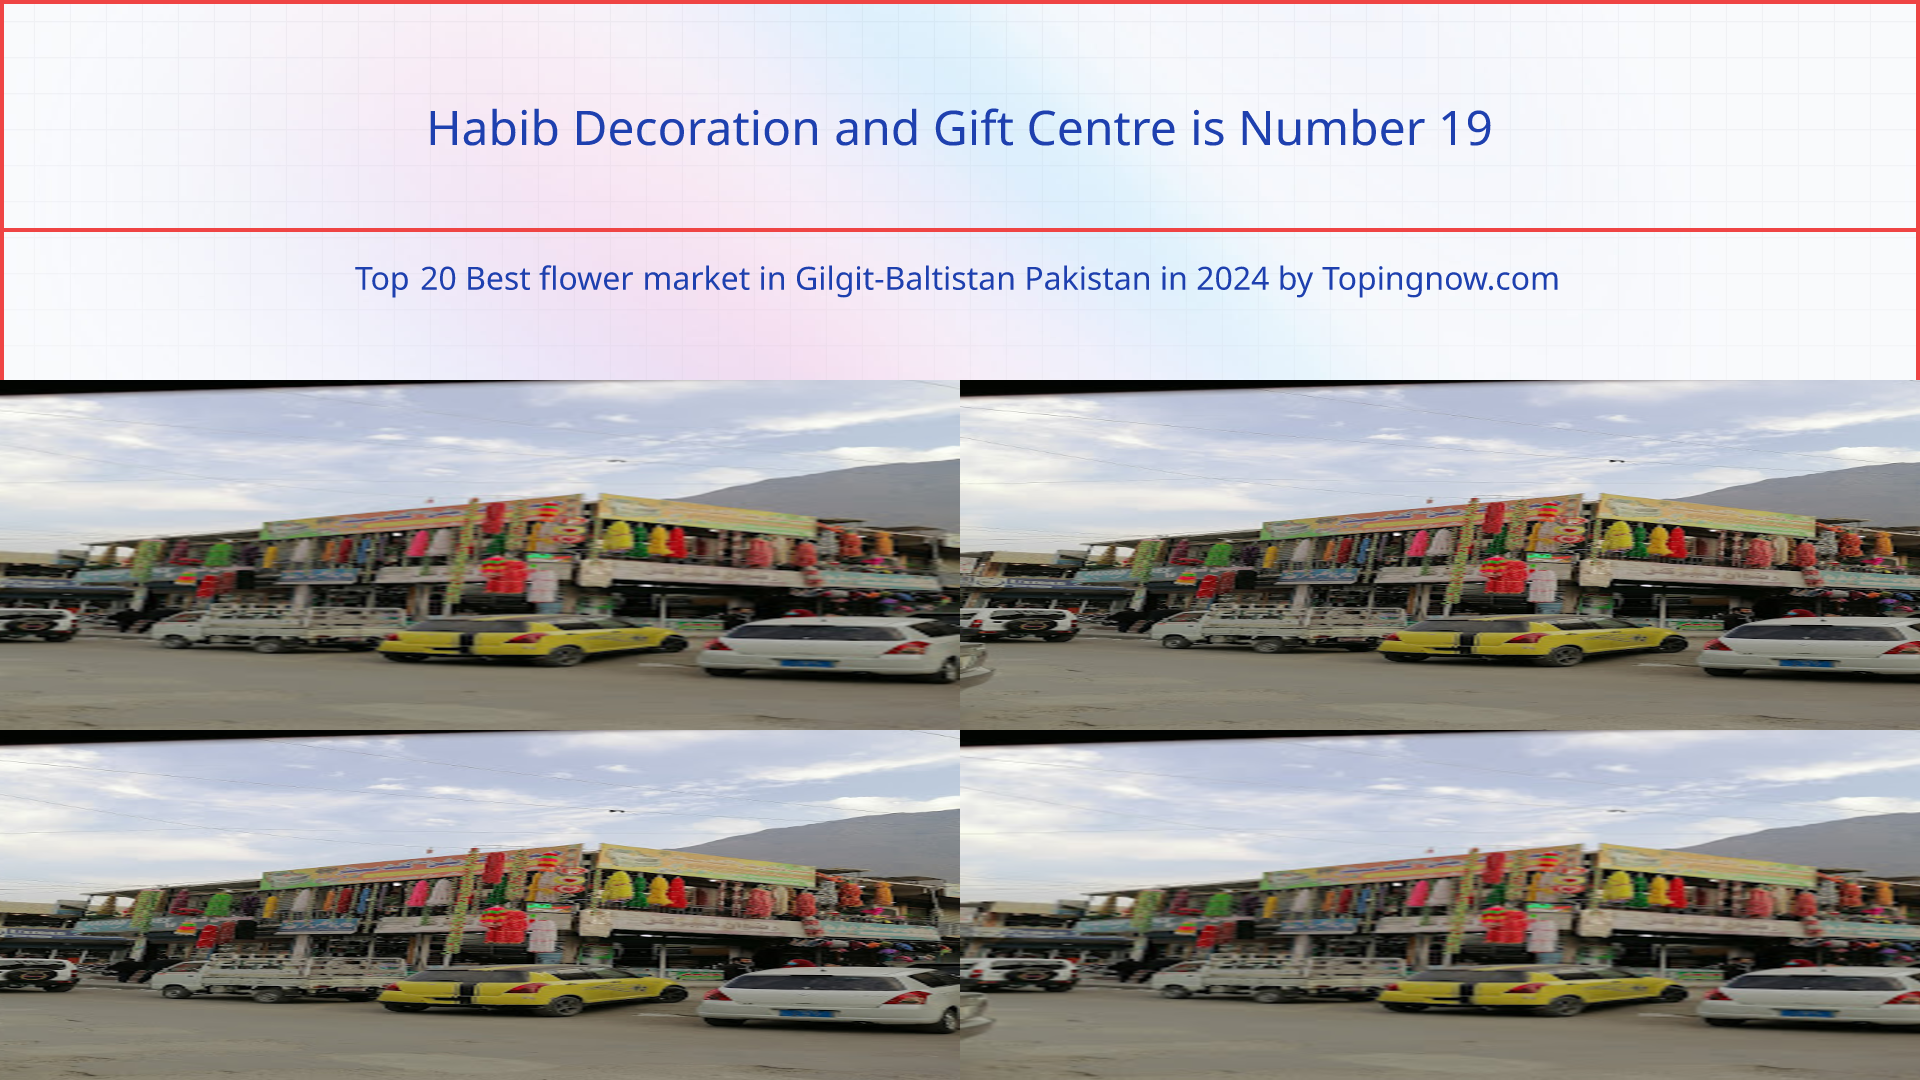 Habib Decoration and Gift Centre: Top 20 Best flower market in Gilgit-Baltistan Pakistan in 2024